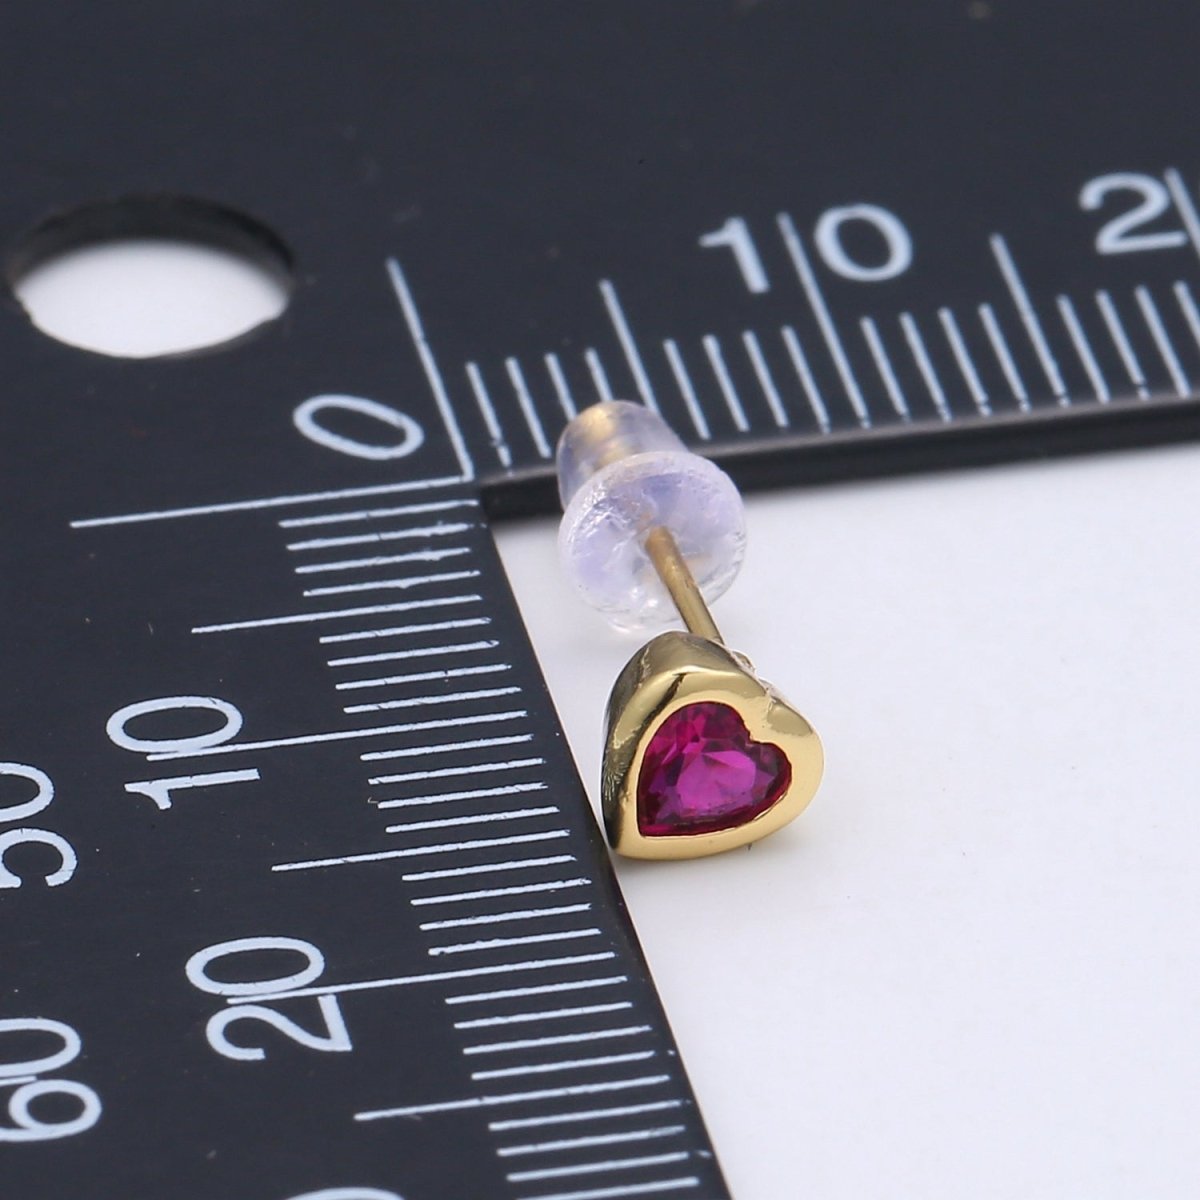 1x Tiny Heart CZ Plain Bezel Set Earrings, 14K gold earring, tiny studs, minimal earring, gold cz stud earring Q-430 Q-431 Q-432 - DLUXCA